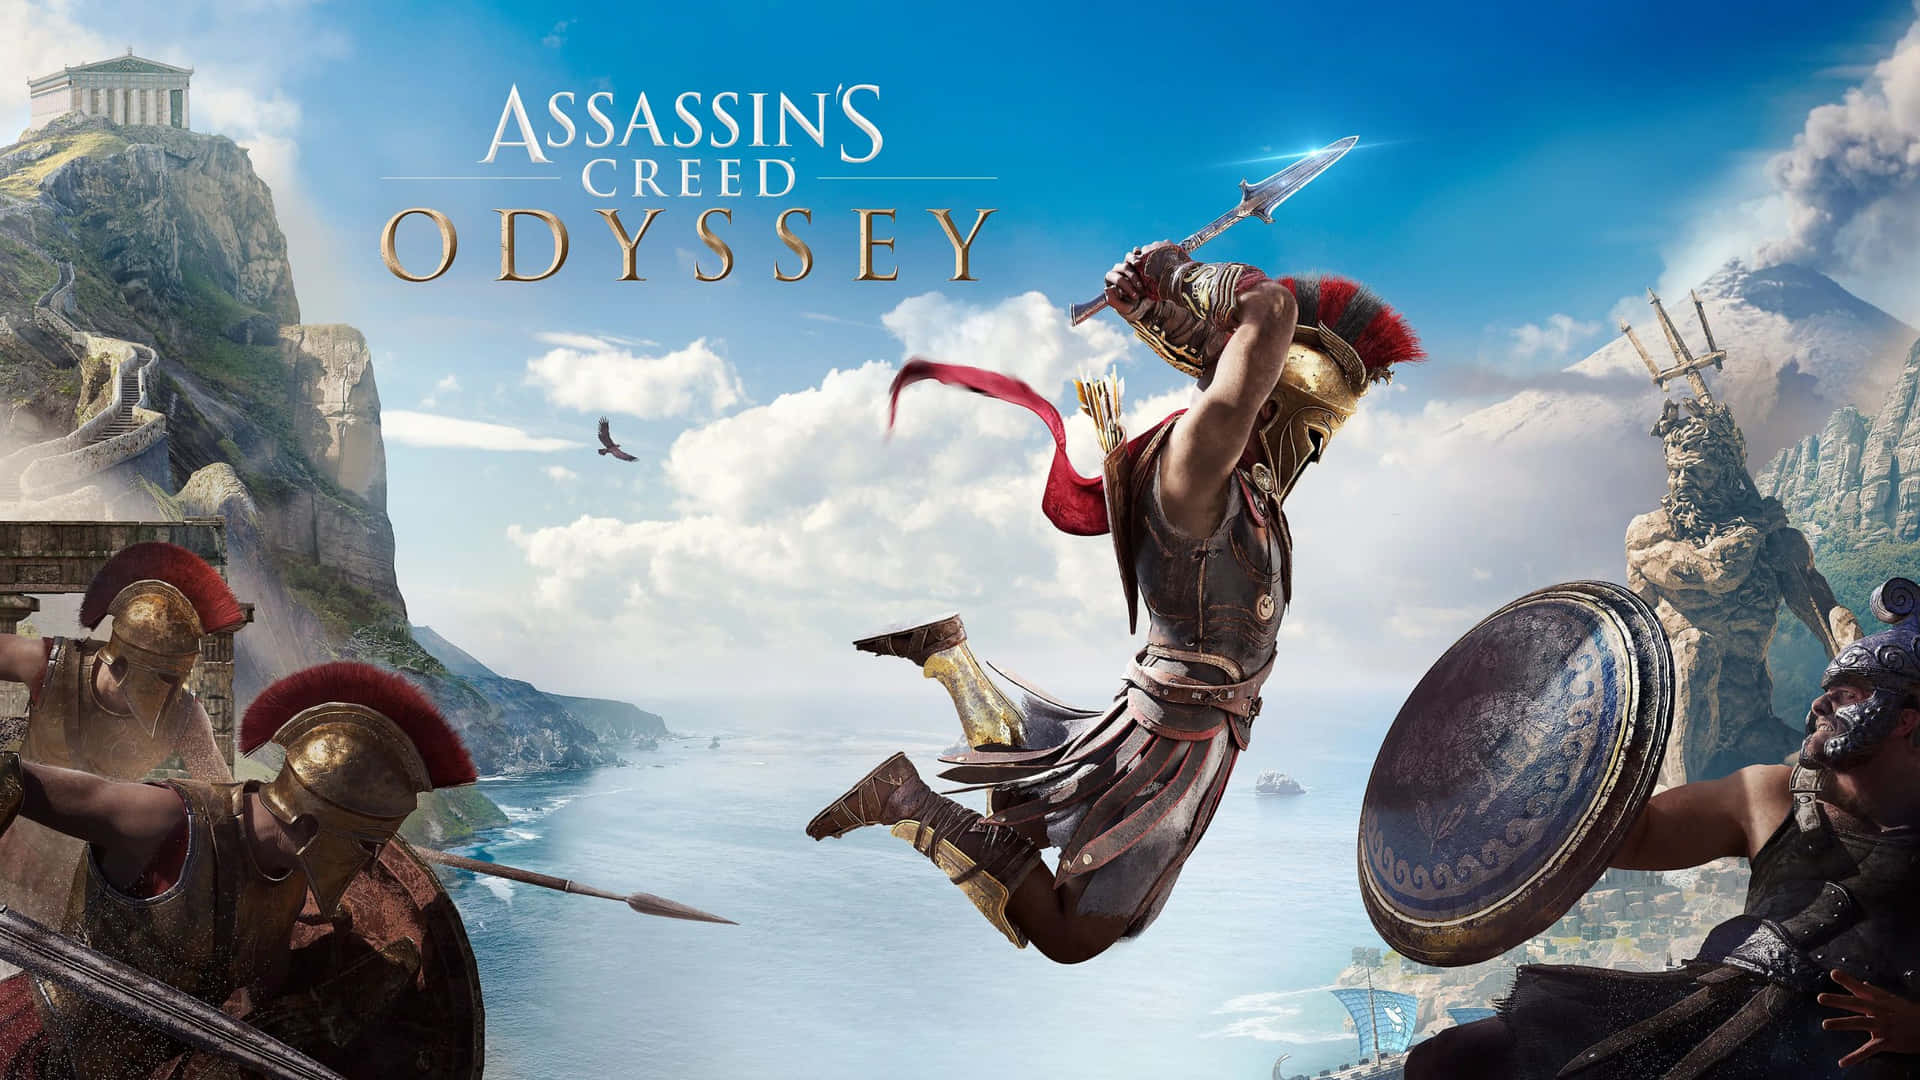 Digital Key Art 1440p Assassin's Creed Odyssey Background